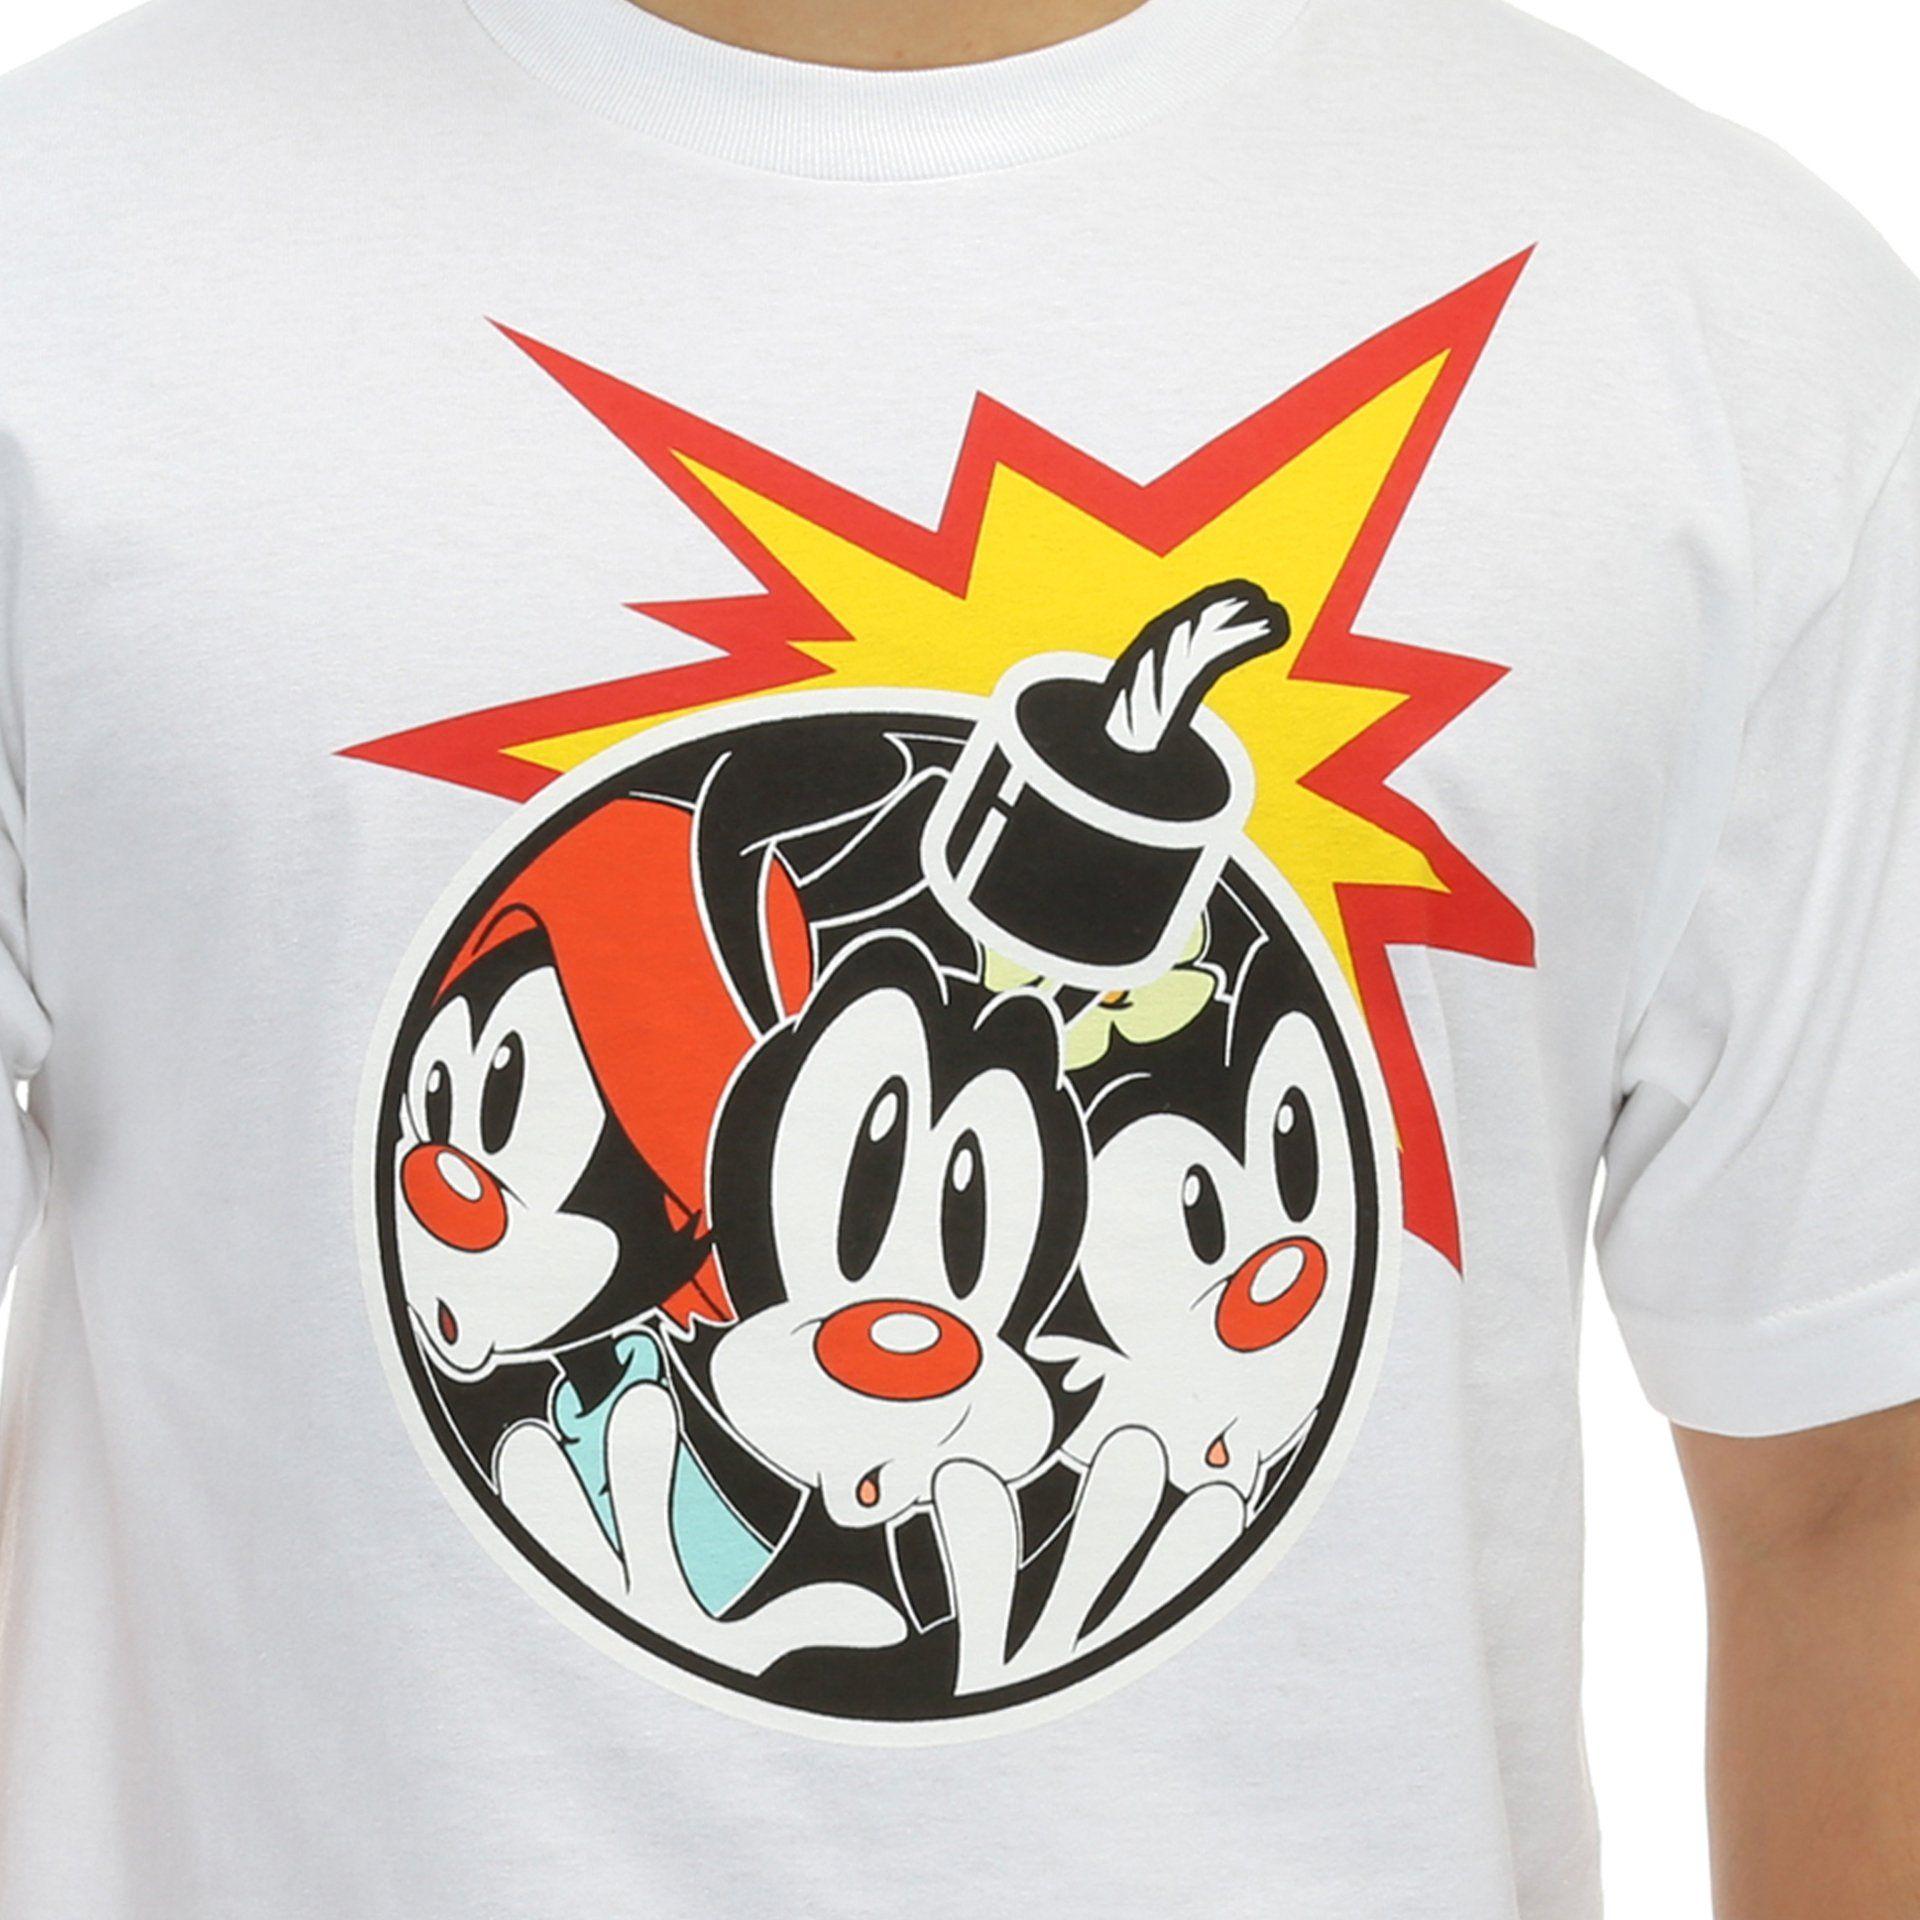 Hundreds Bomb Logo - The Hundreds x Animaniacs AniAdam Bomb T-Shirt - White - New Star